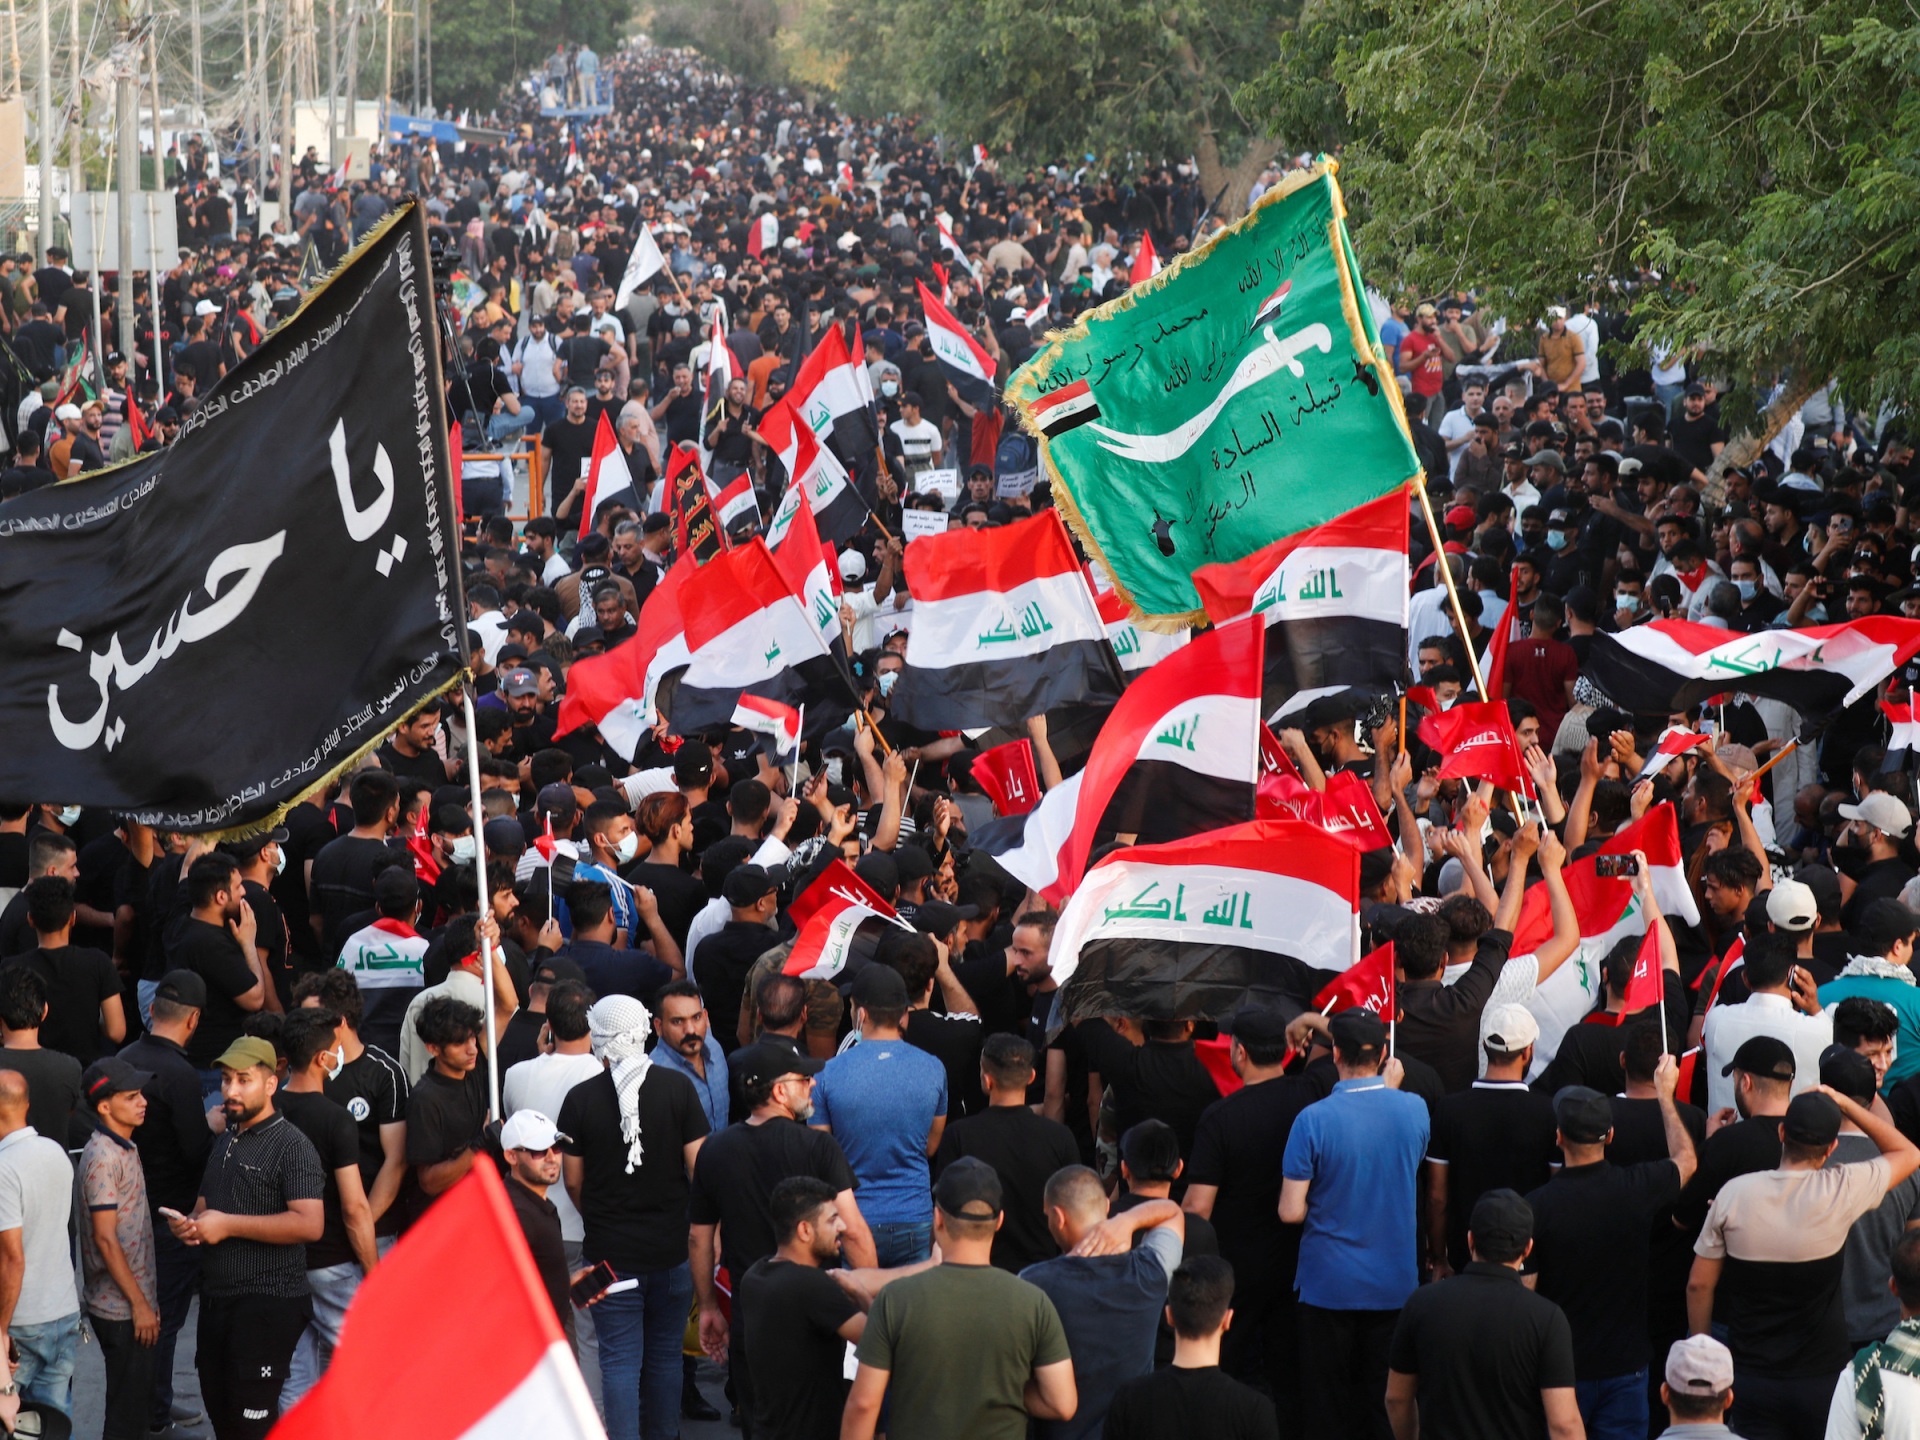 Rival Shia groups square off over Iraq leadership vacuum